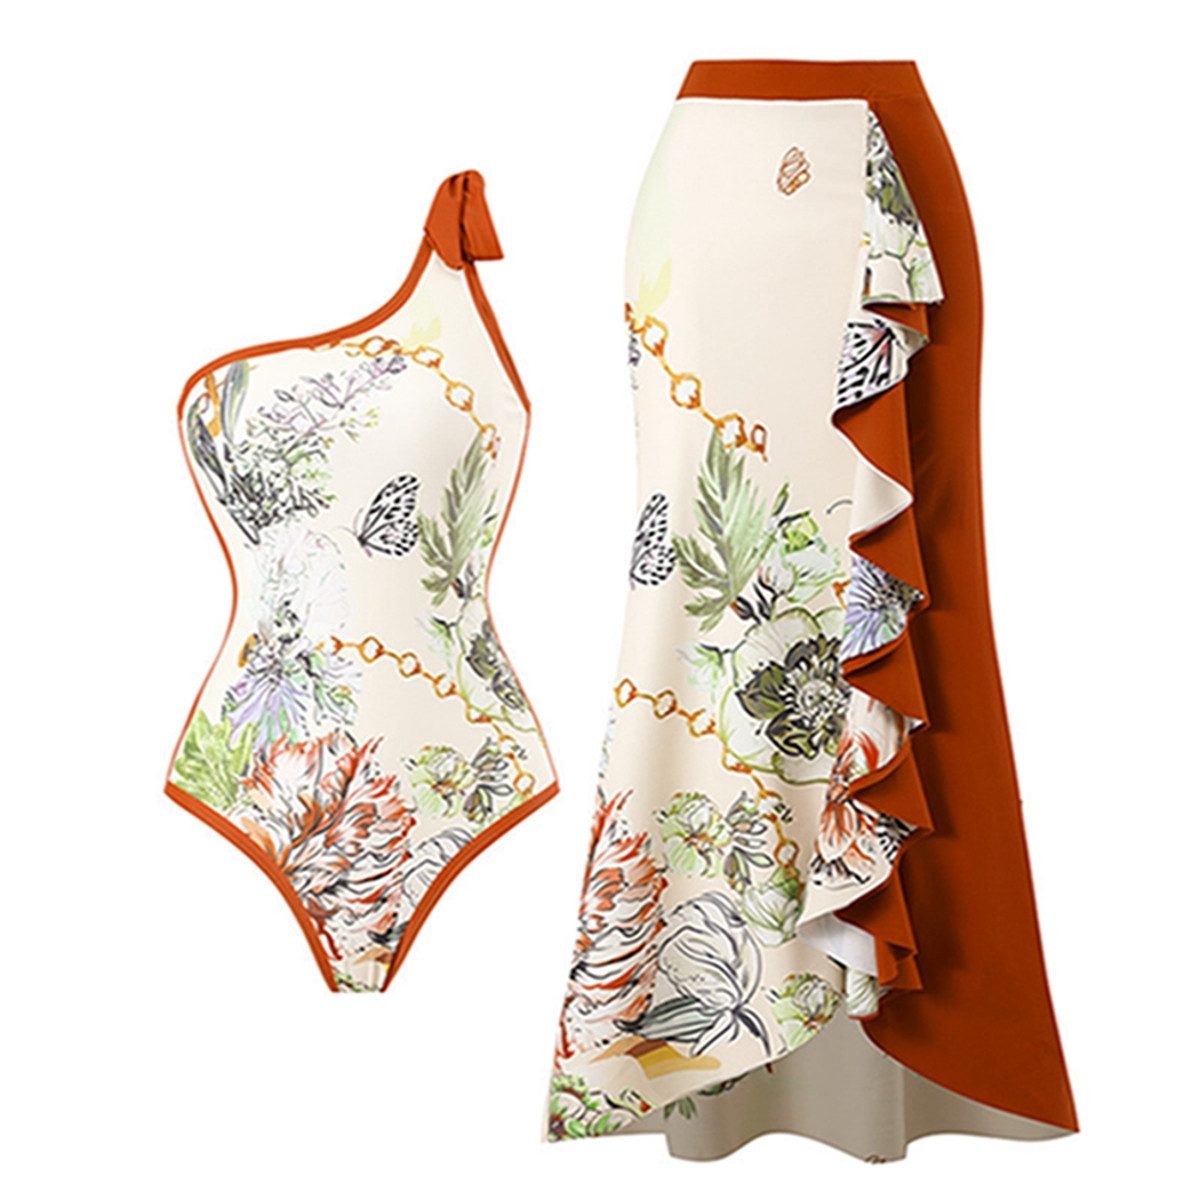 RUZU UG Schwimmanzug Damen Bademode bedruckter Strand Sonnenrock Badeanzug Badekleid Bikini